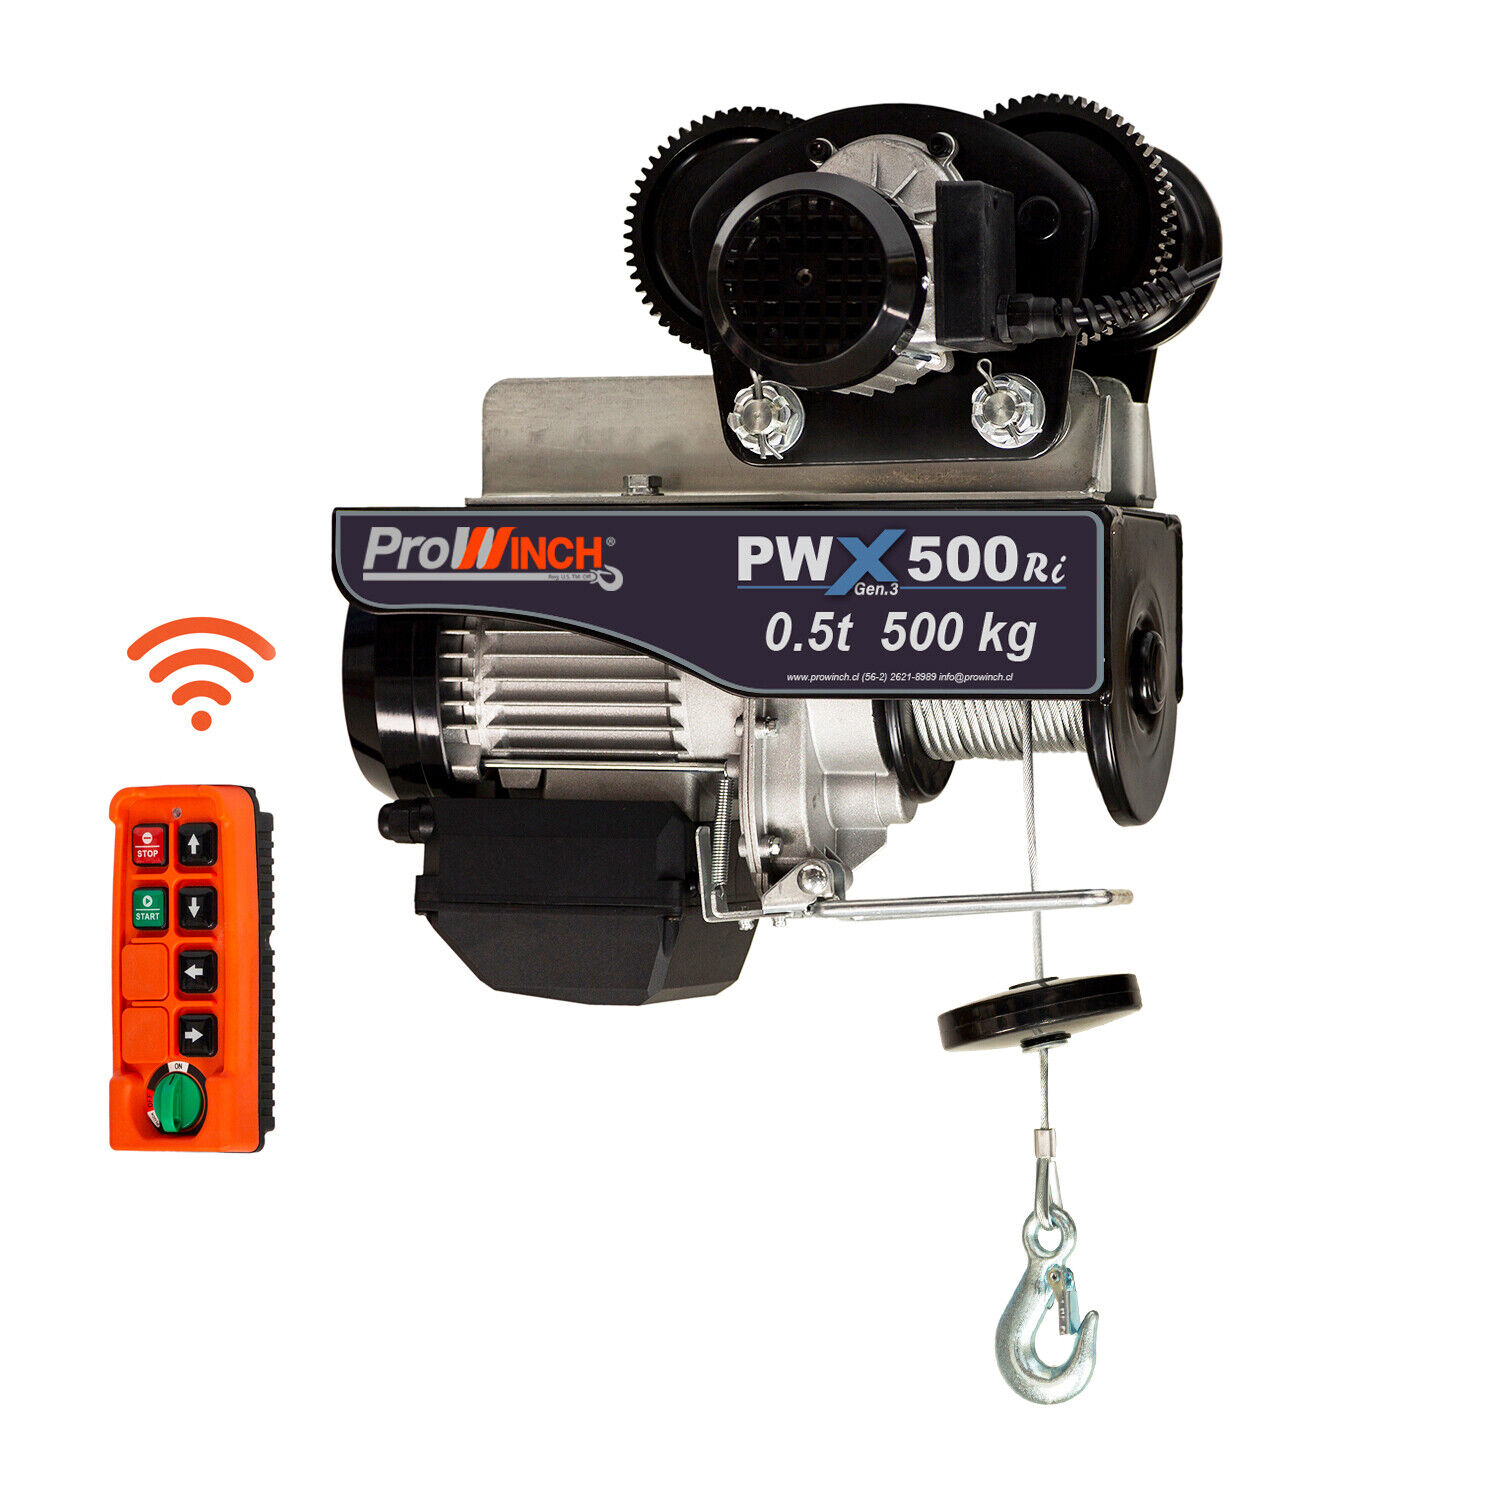 Prowinch 550 Lbs. / 1100 Lbs. Electric Rope Hoist W/trolley 220~240v 50/60hz W/